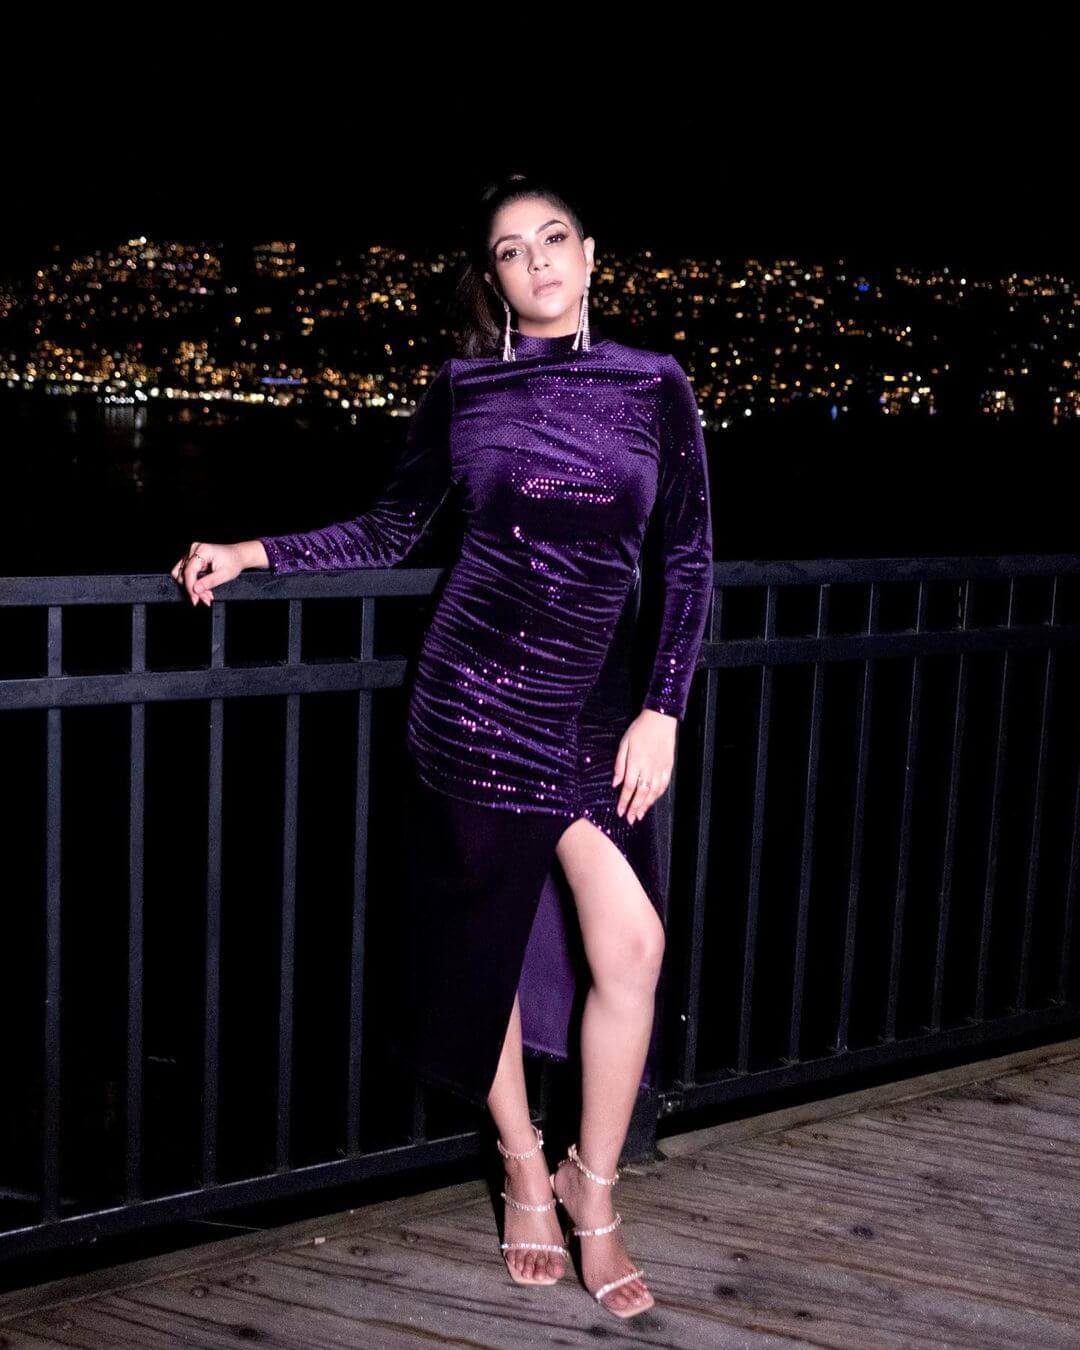 Diljott Look Stunning In Purple Thigh Slit Bodycon Dress